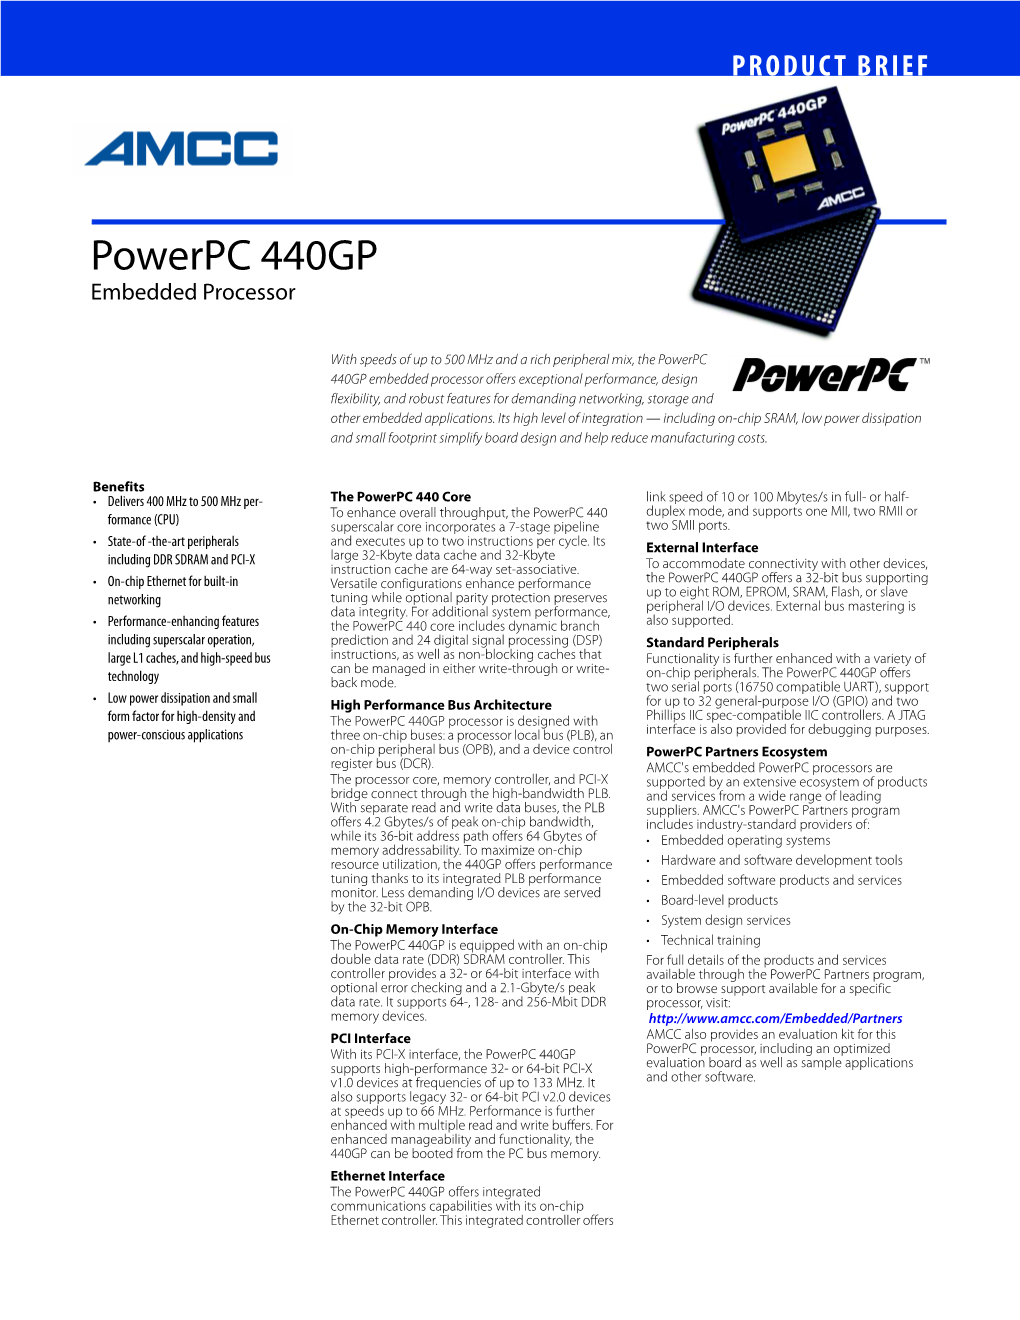 Powerpc 440GP Embedded Processor